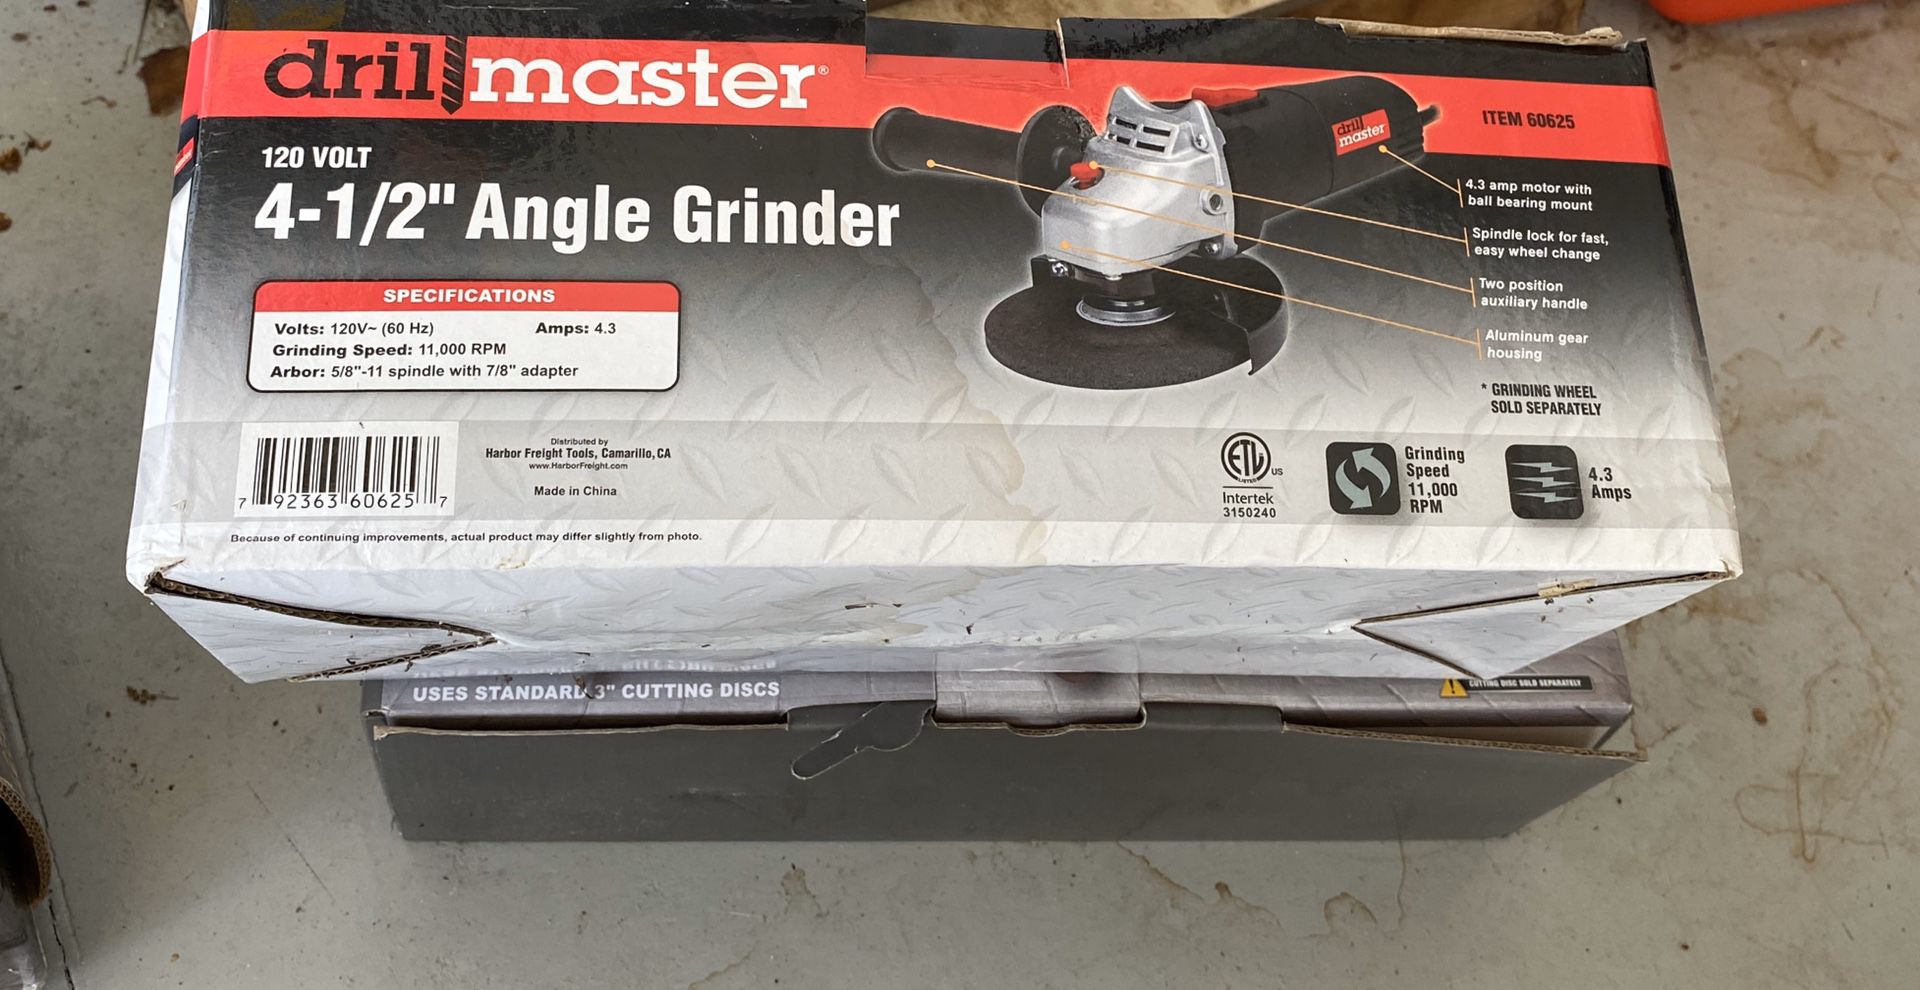 Drill Master 120 volt 4 1/2” angle grinder